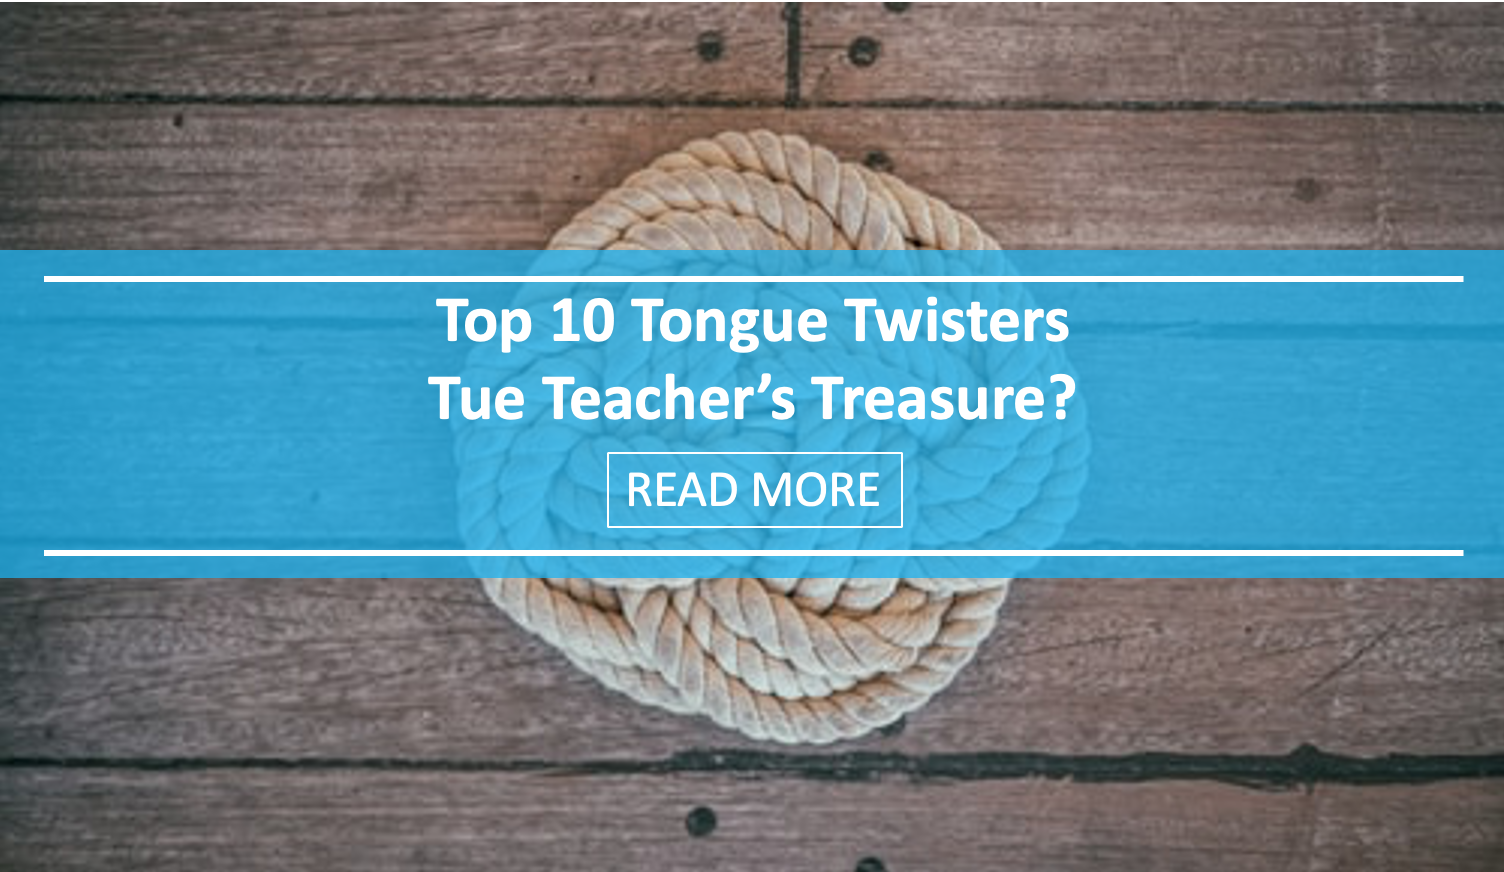 Top 10 Tongue Twisters: True Teacher's Treasure?